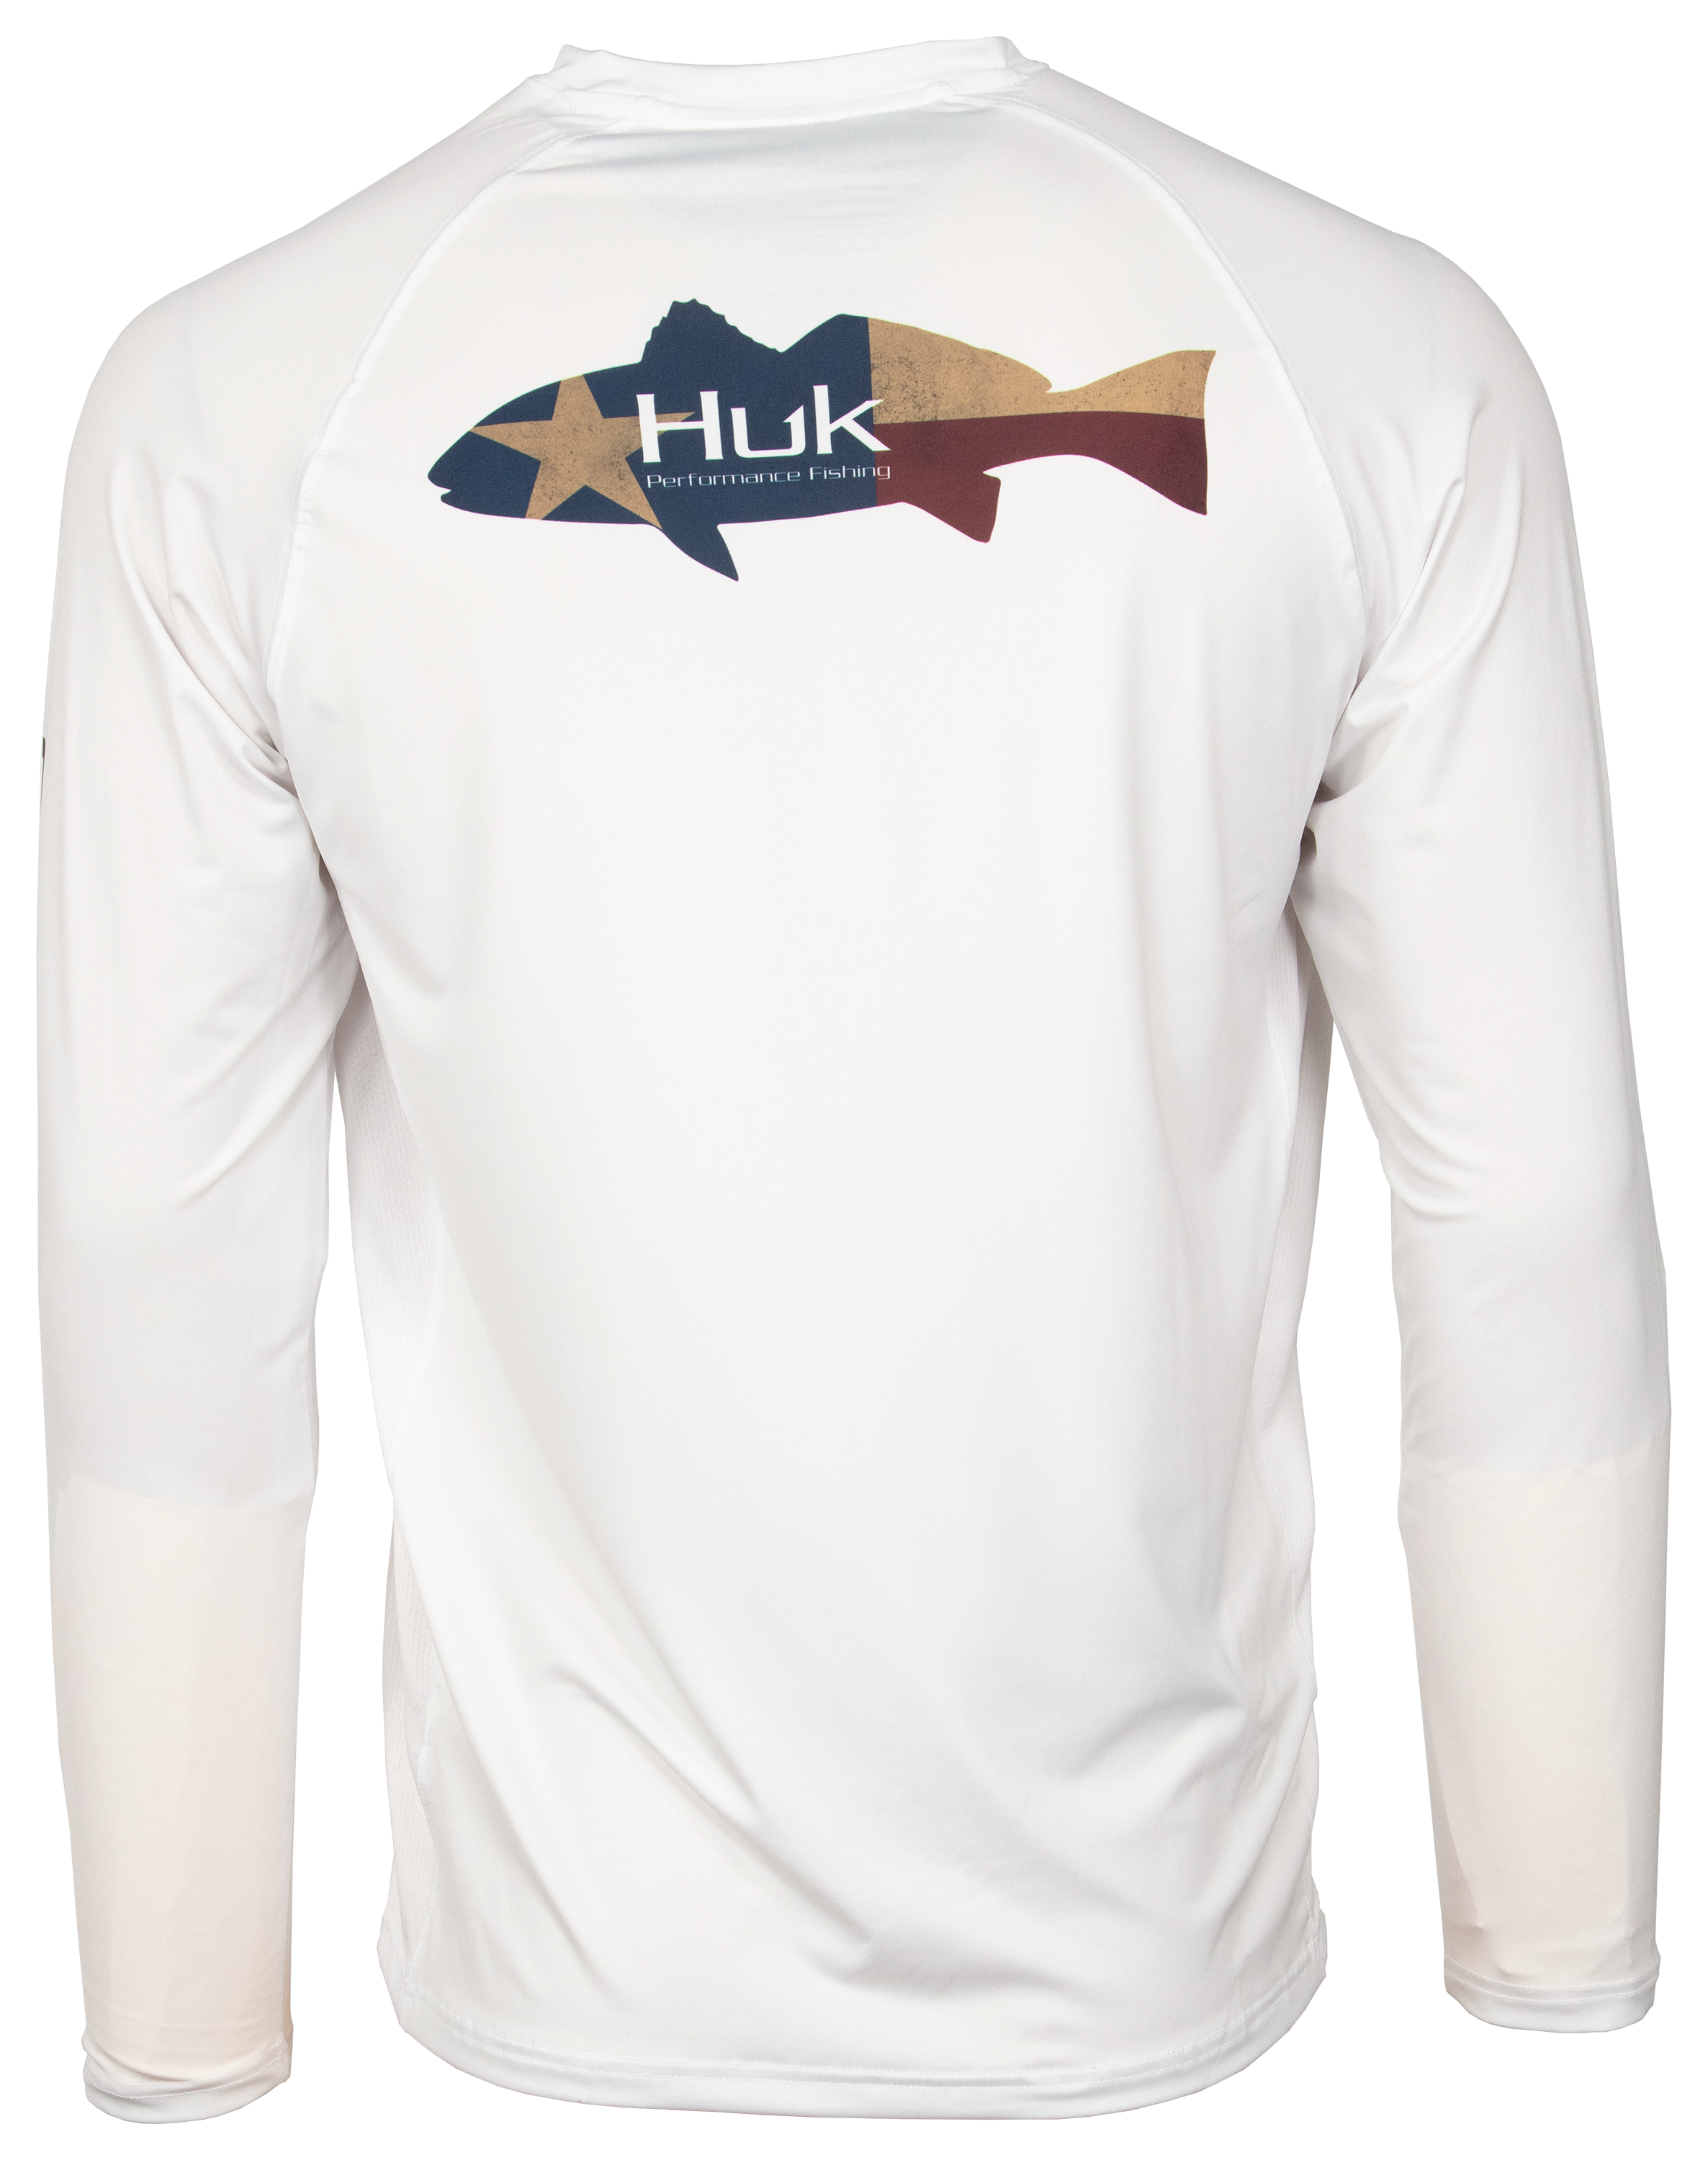 Huk Texas Redfish Long-Sleeve Performance Shirt for Men